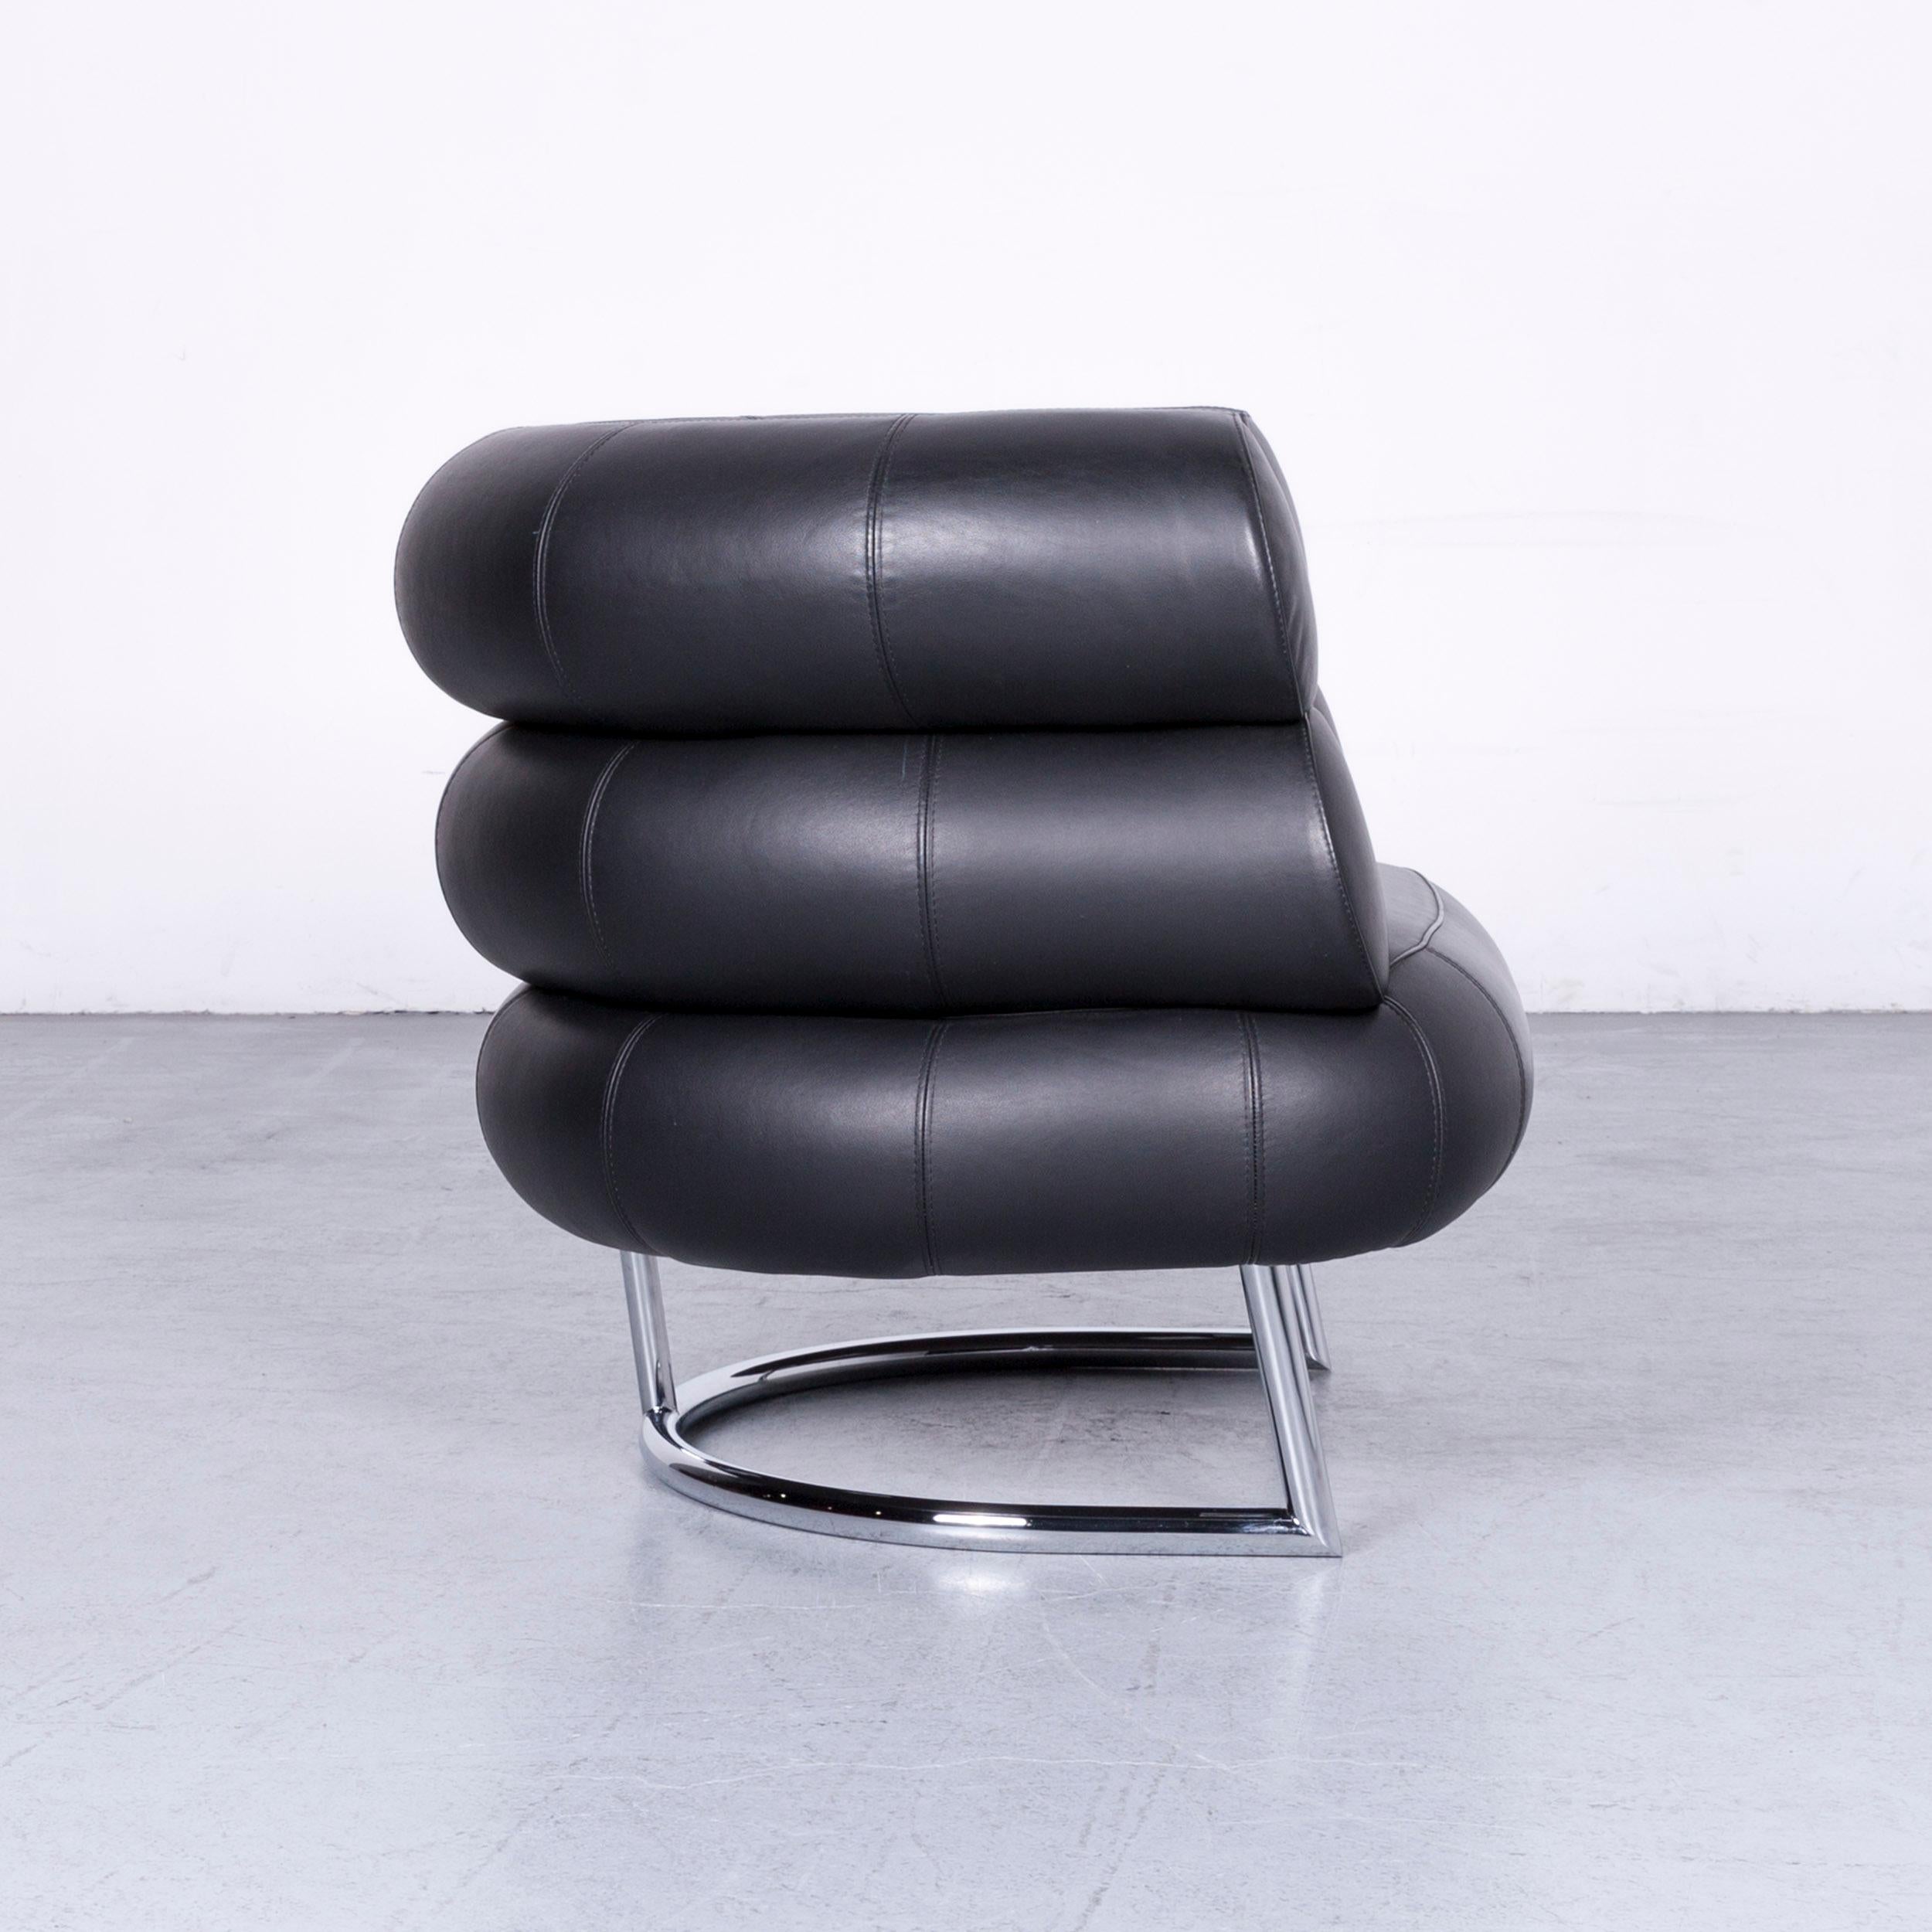 ClassiCon Bibendum Chair Designer Leather Armchair Black For Sale 1